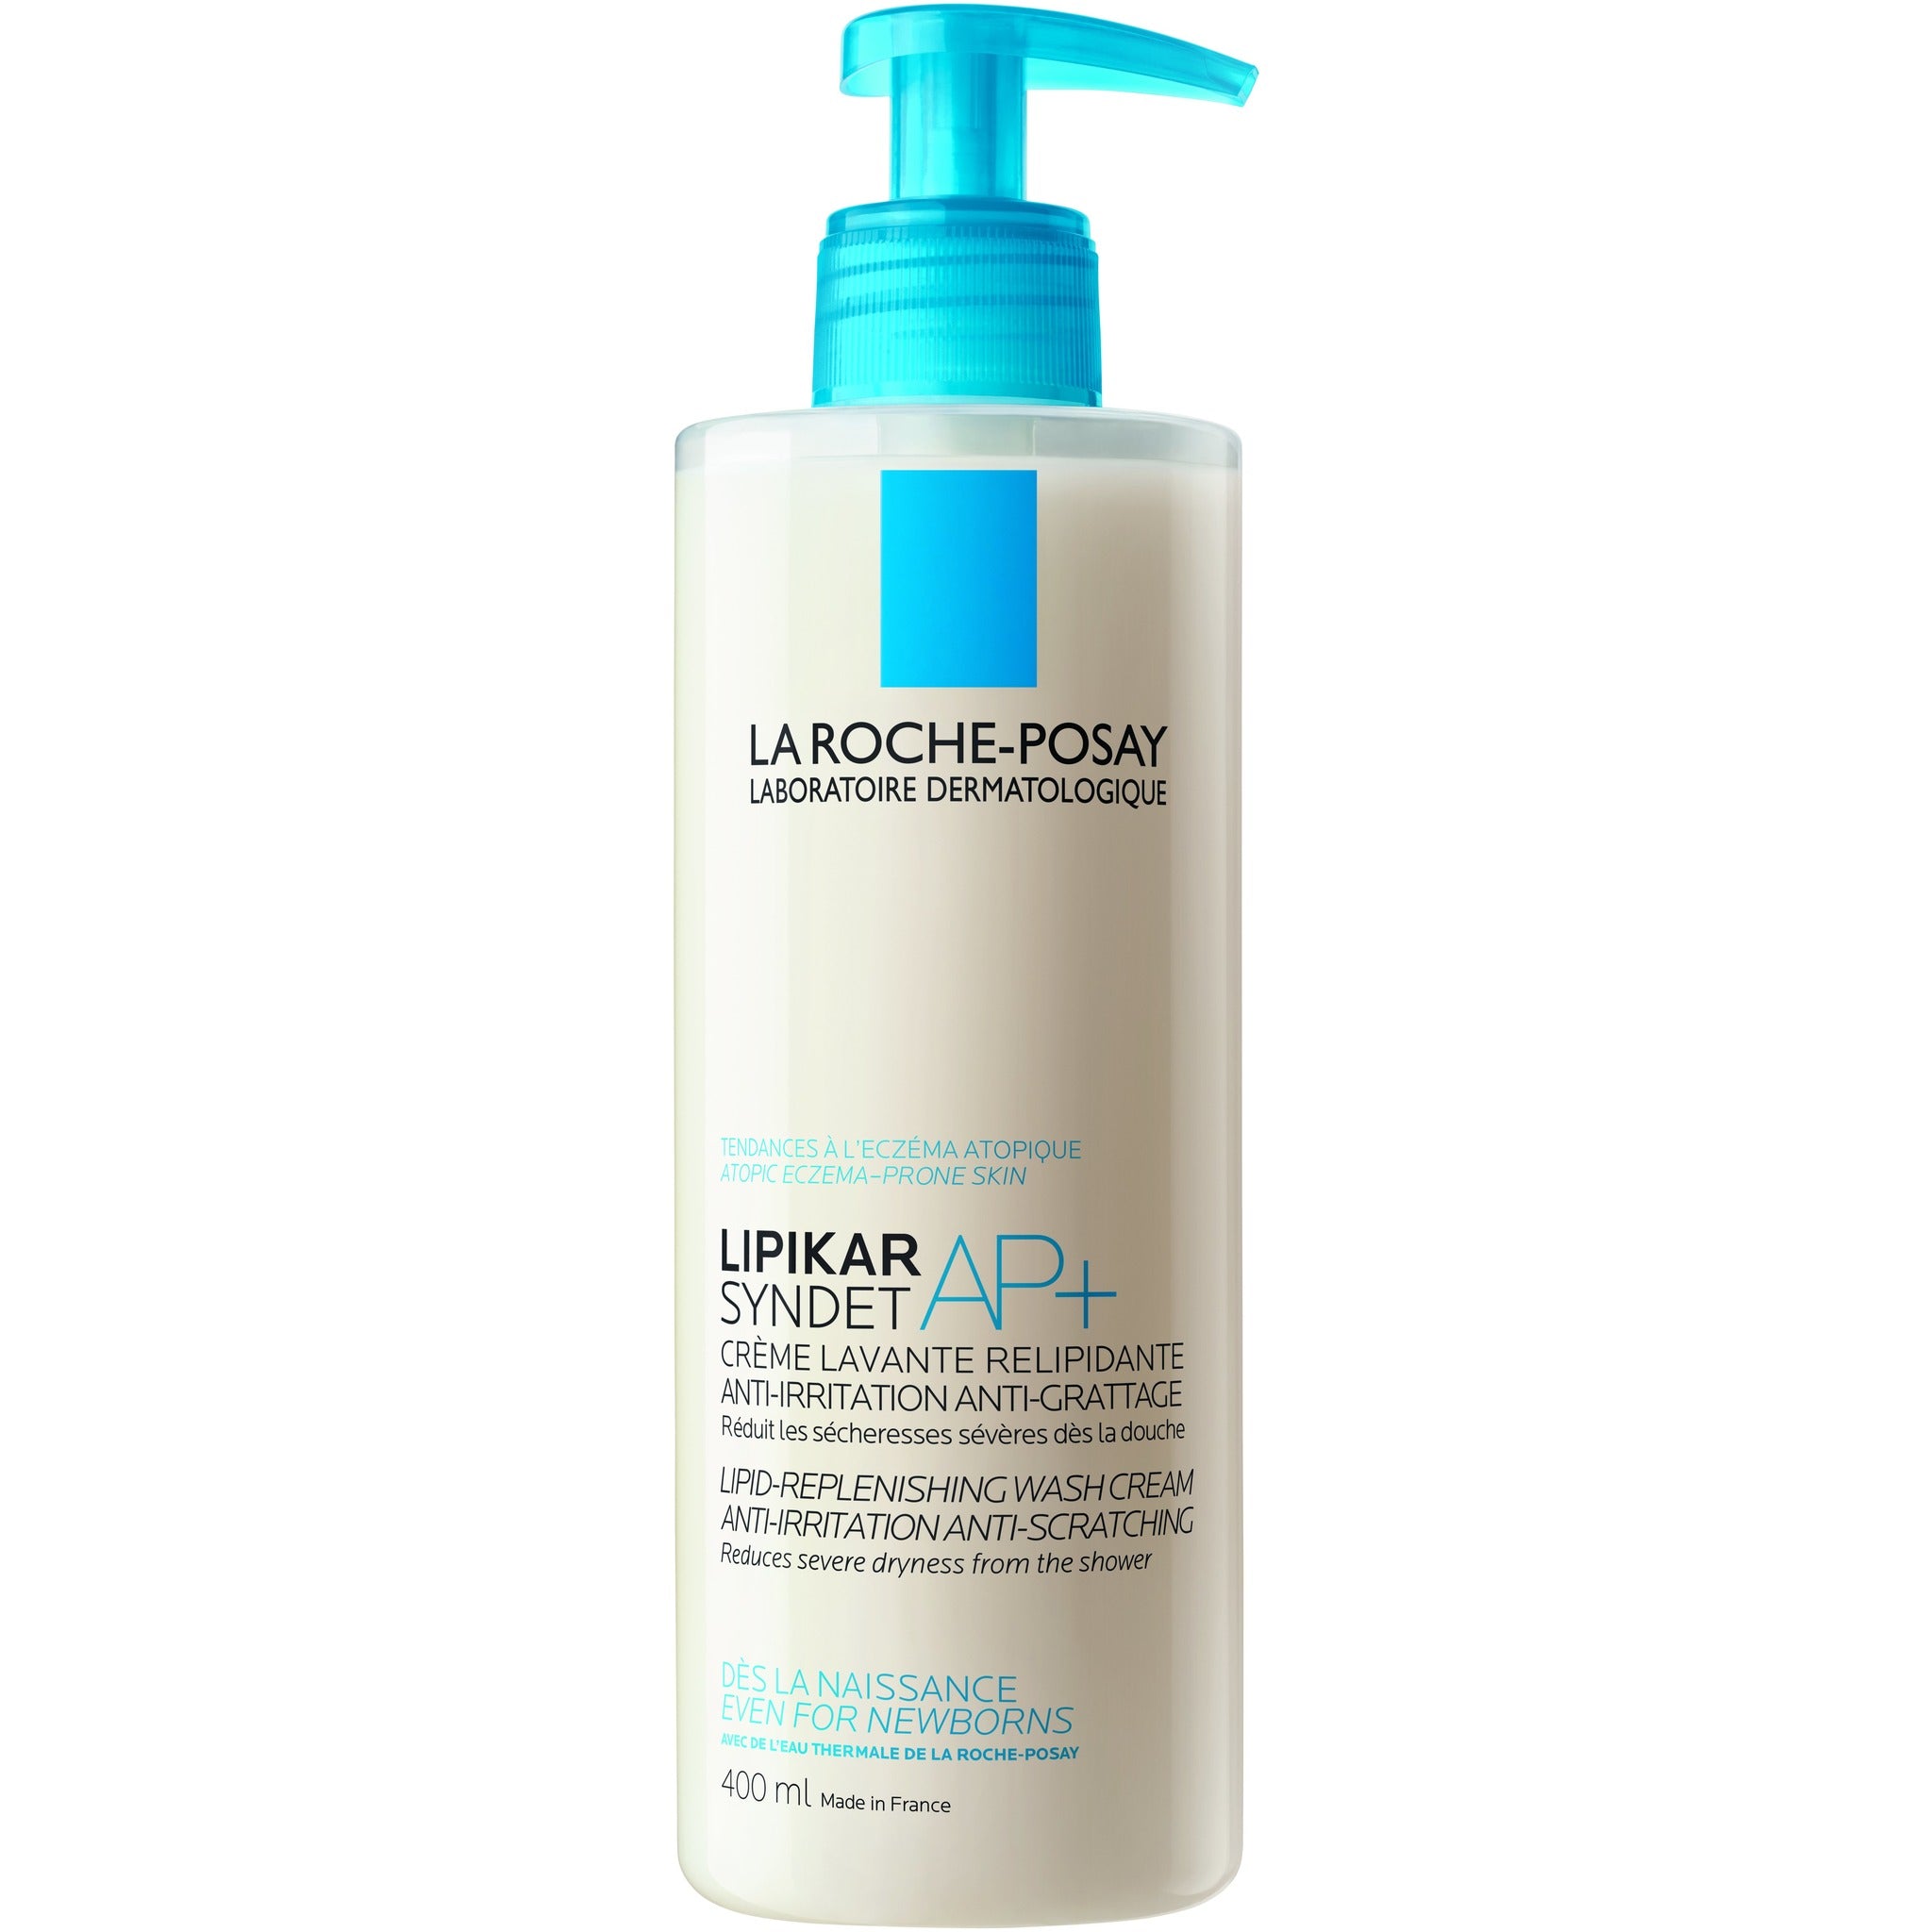 La Roche-Posay LIPIKAR Syndet AP+ Lipid-Repairing Cream Wash 400 ml